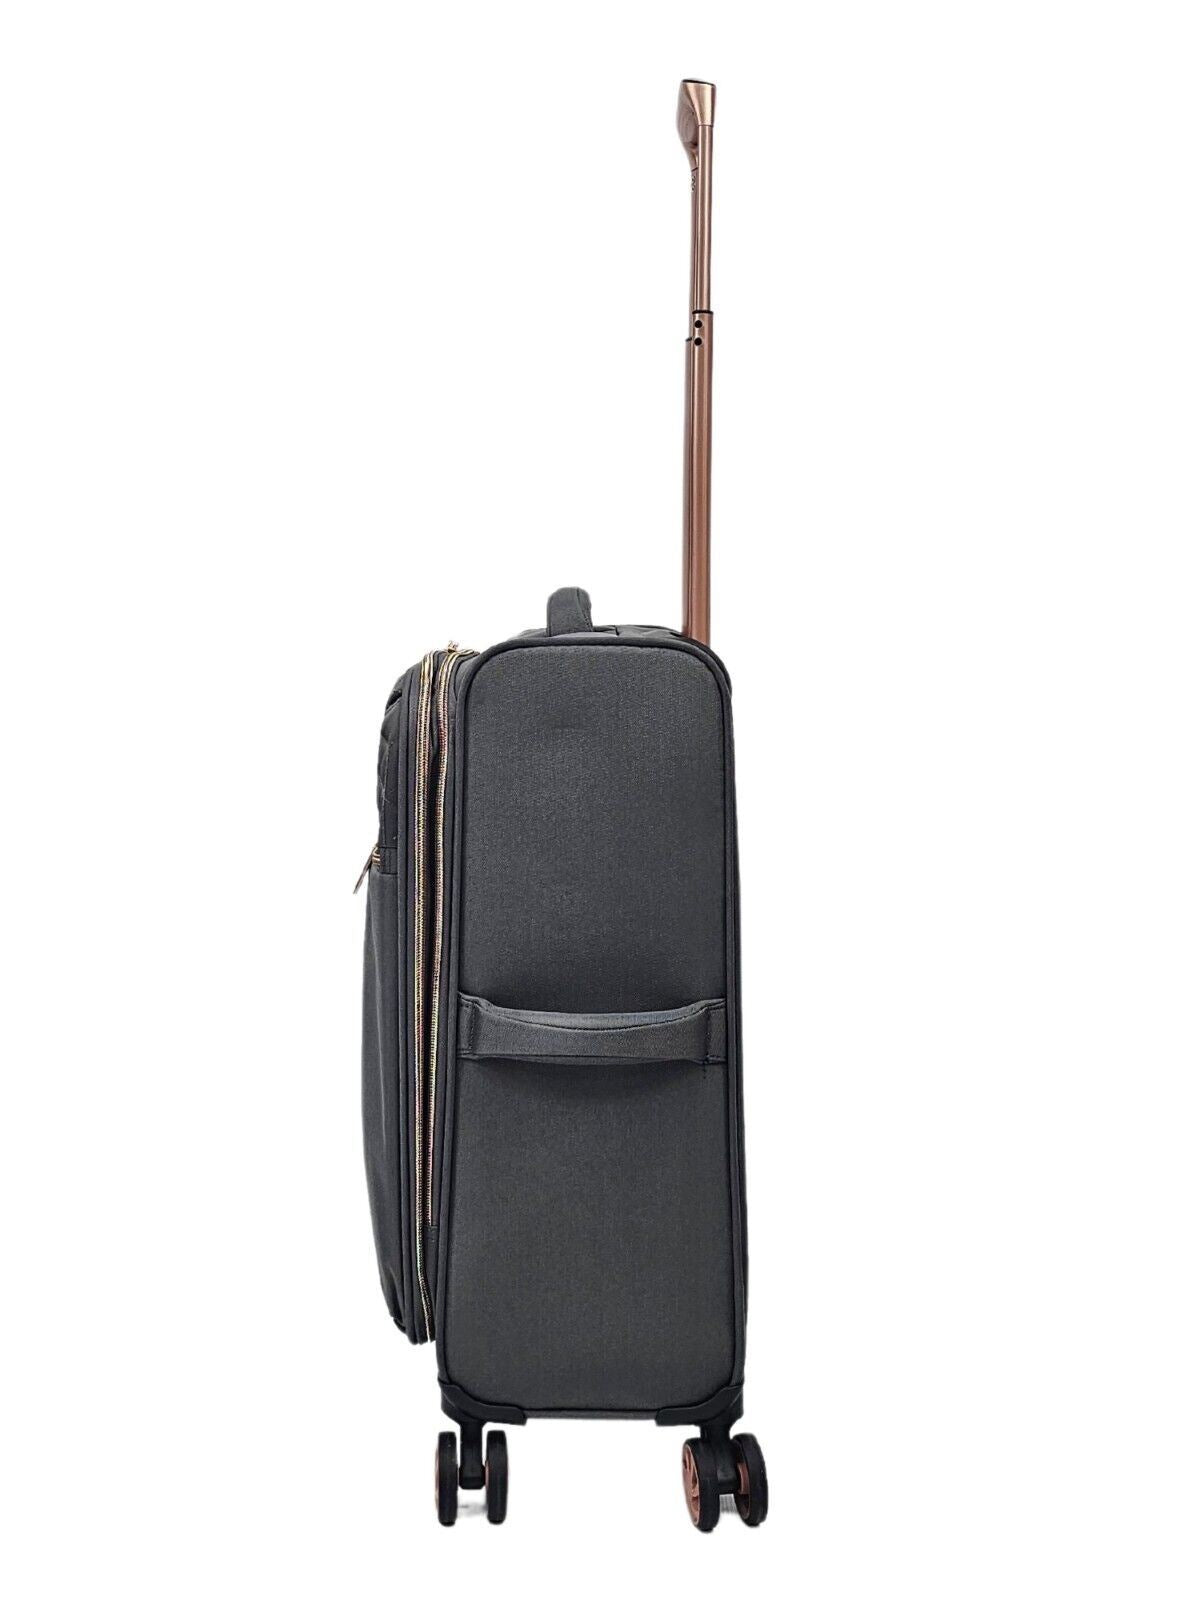 Cabin 4 Wheel Luggage Travel Soft Lightweight Bags